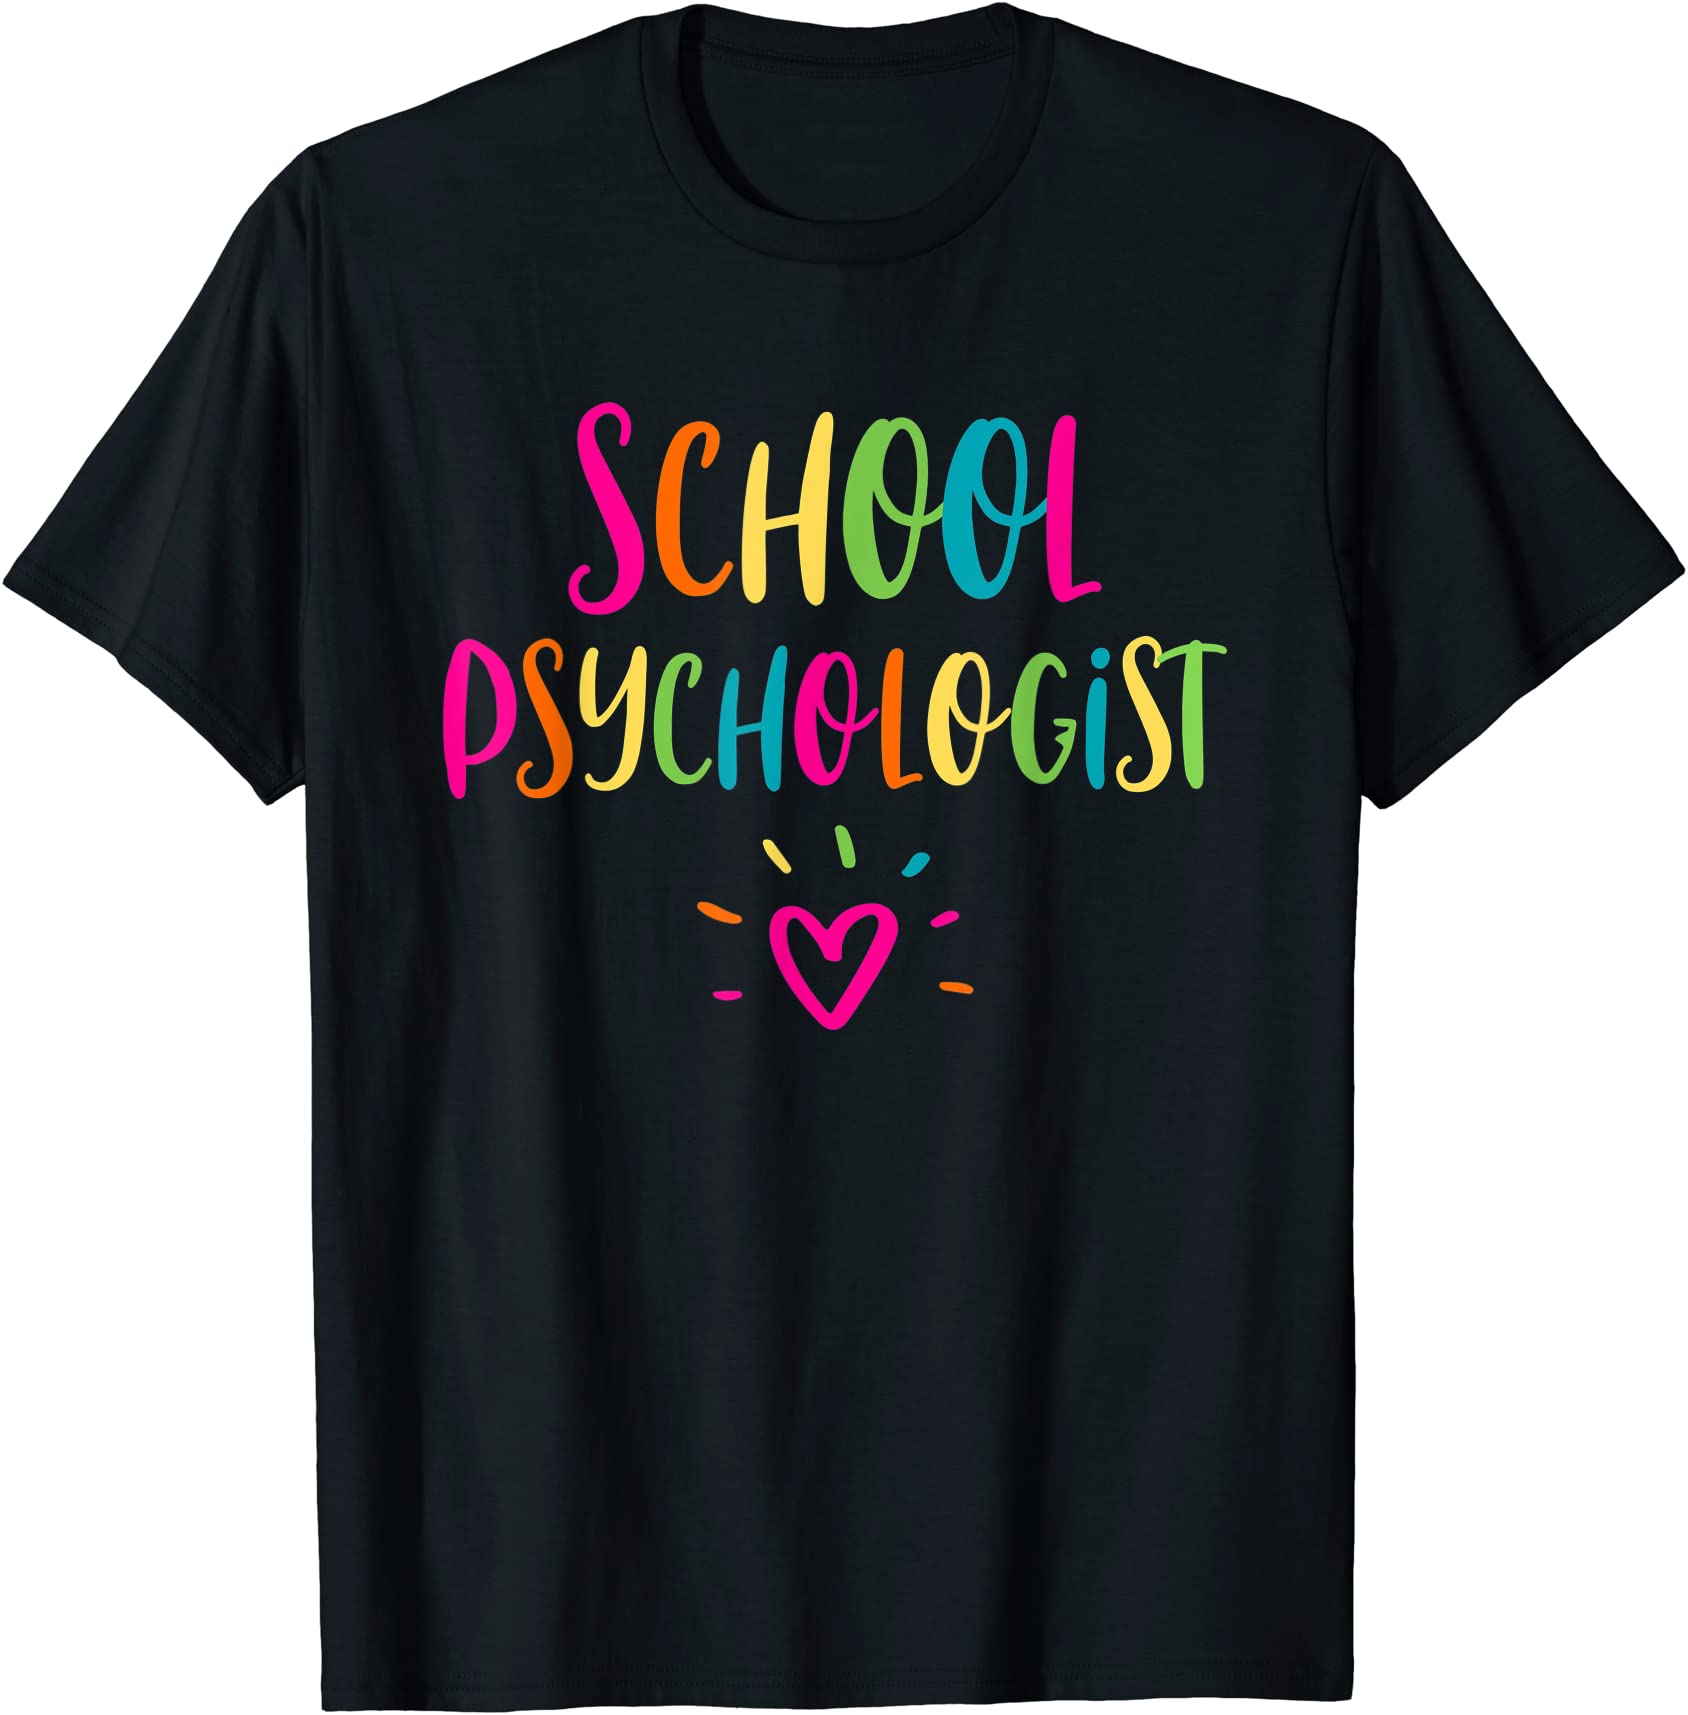 school psychologist psychology teacher school psych t shirt men - Buy t ...